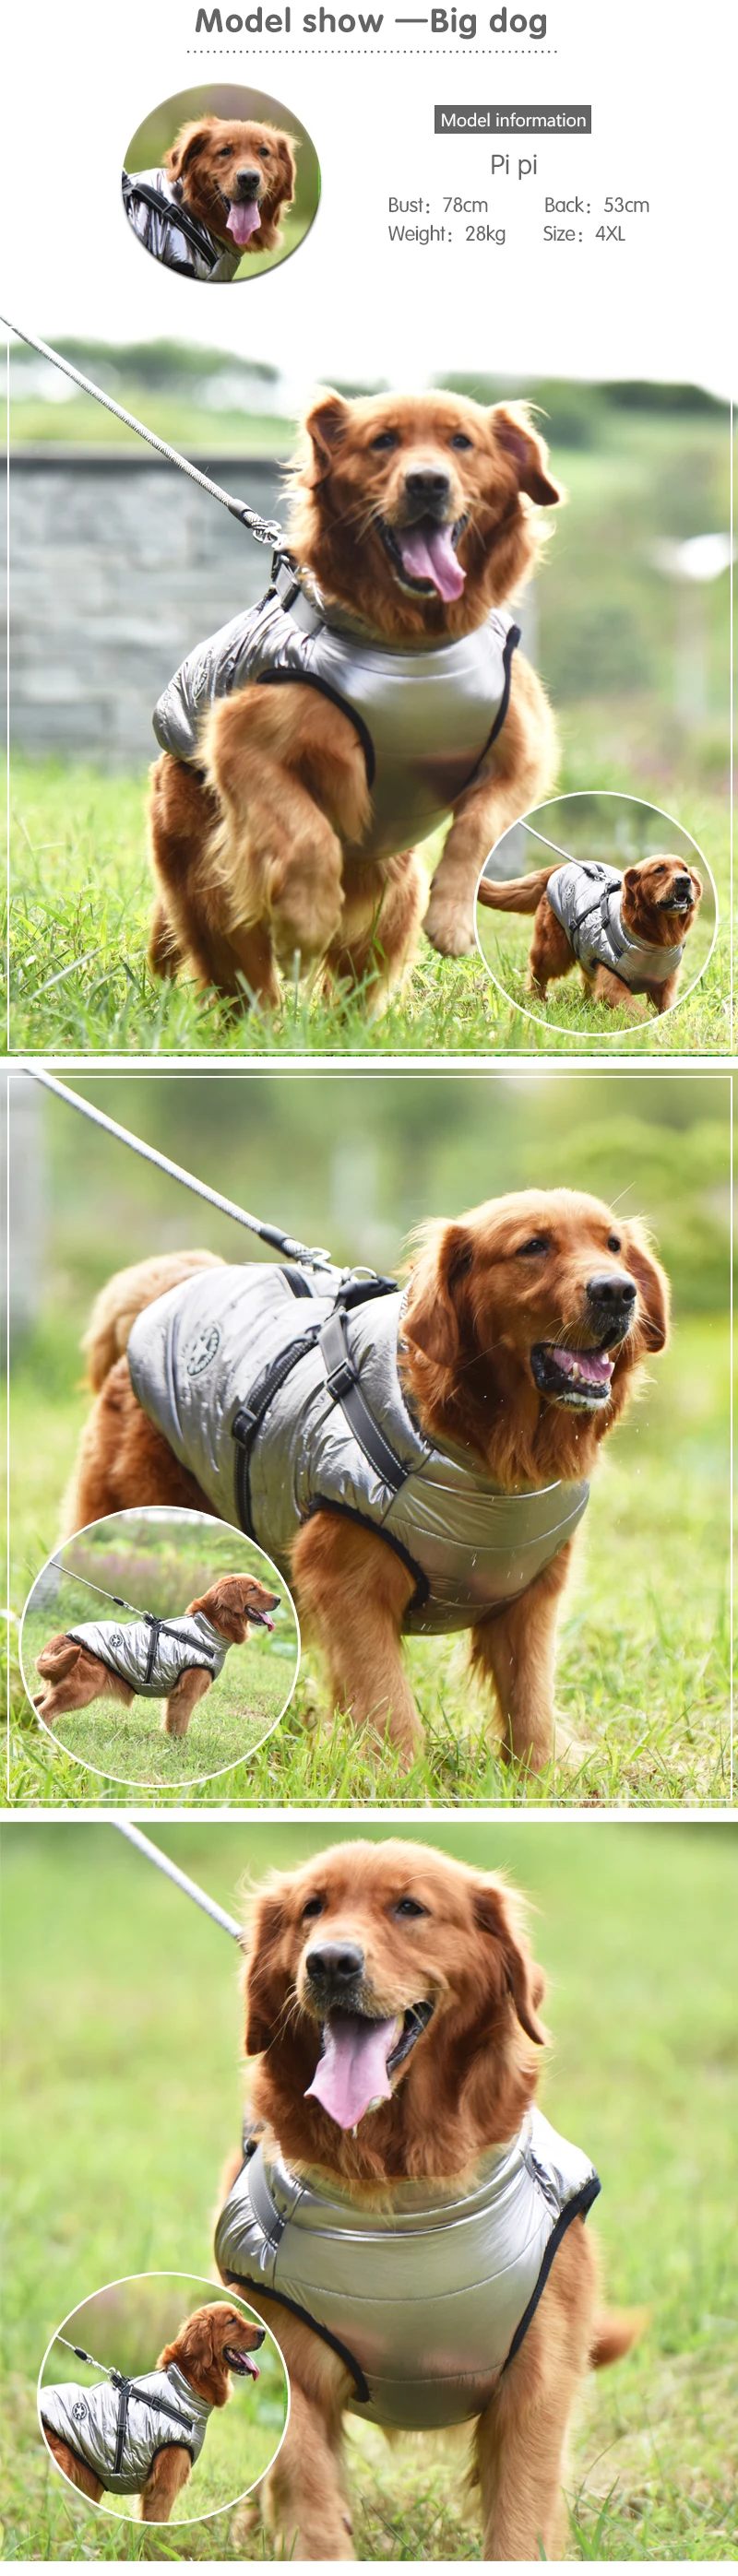 Large Pet Dog Jacket With Harness